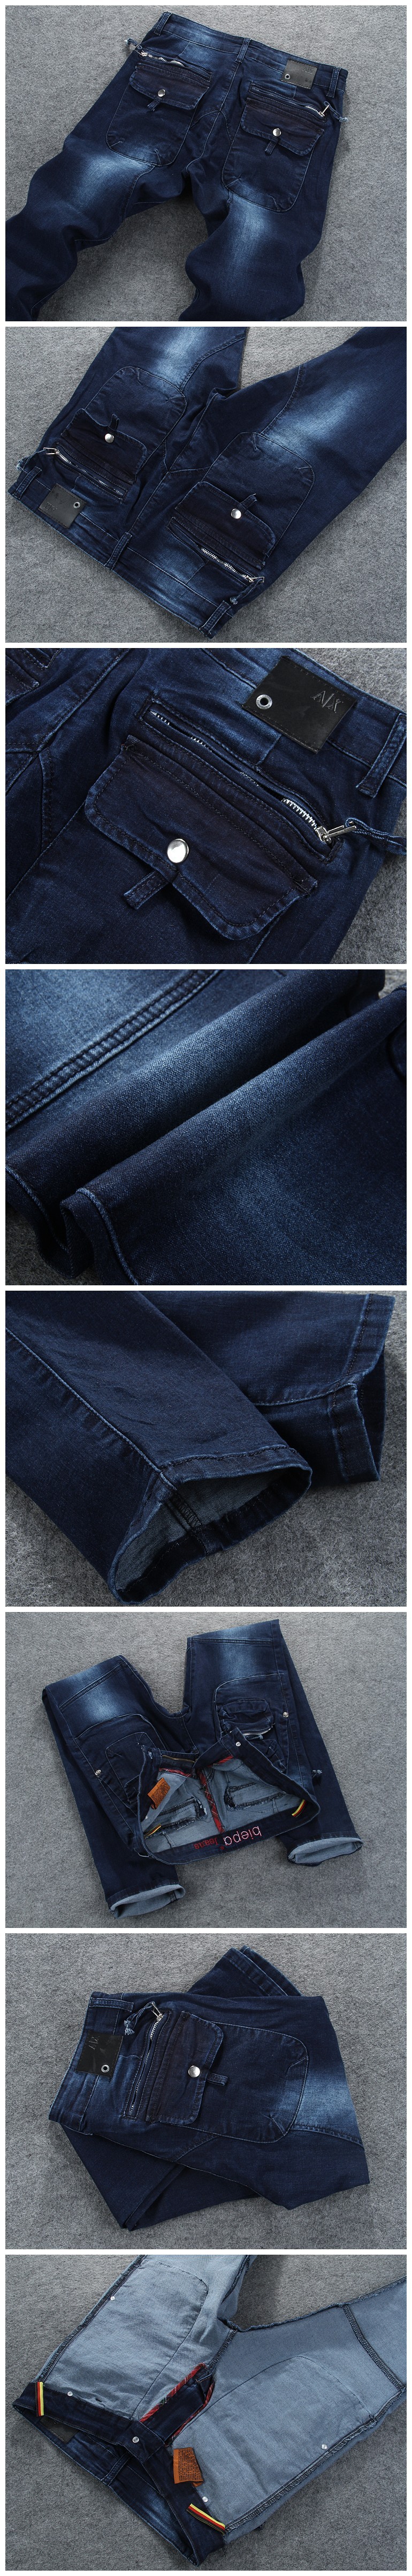 Mens Skinny Jeans 2015 New Summer Style Biepa Jeans Rock Pockets Pants For Men Mens Skinny Jeans